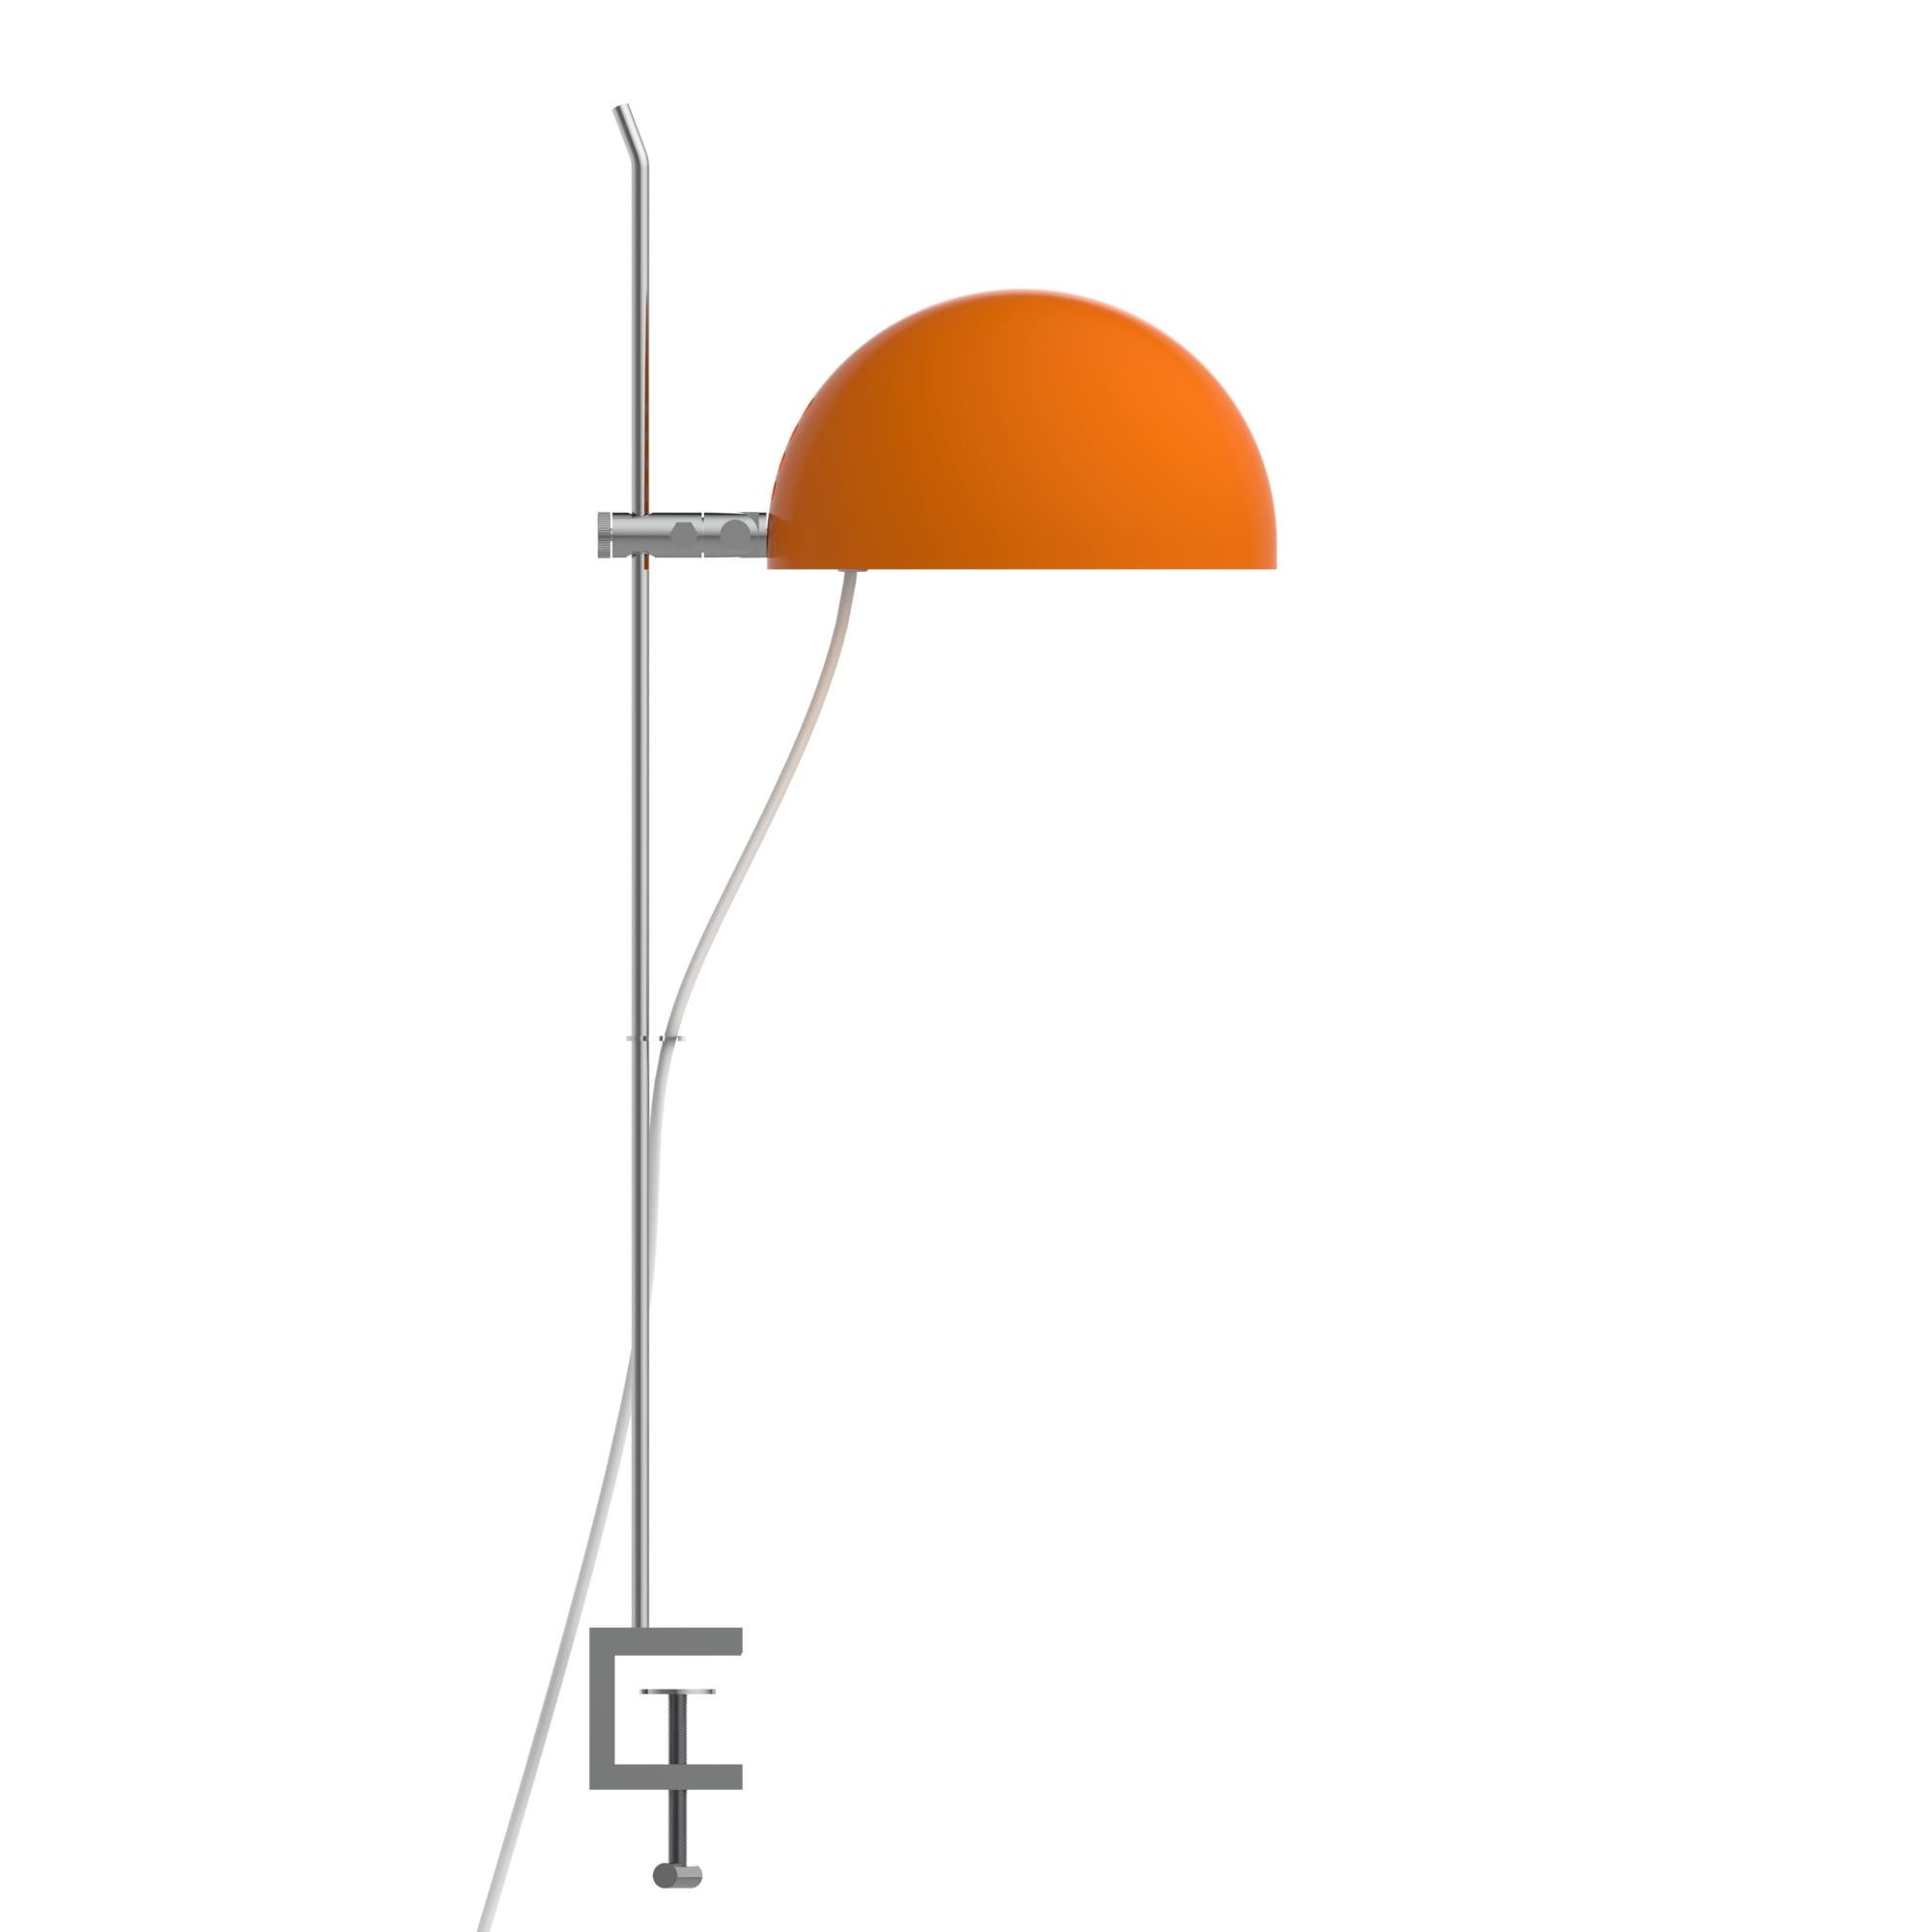 Alain Richard 'A22F' Task Lamp in Red for Disderot For Sale 4